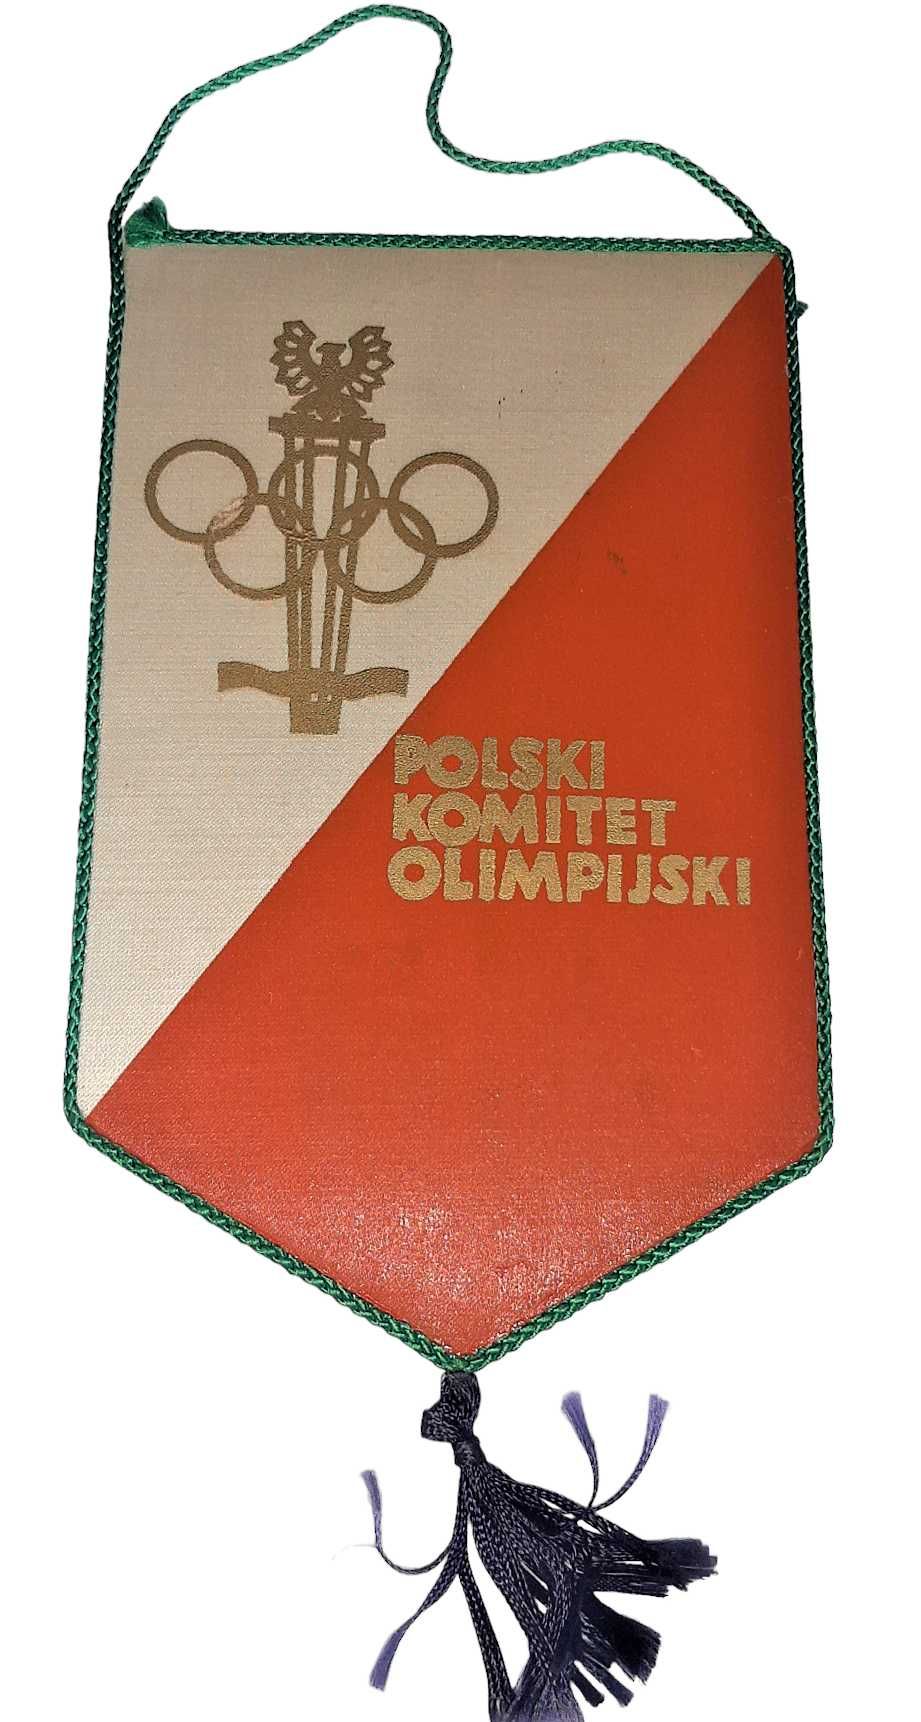 Proporczyk Montreal Kanada 1976 Polski Komitet Olimpijski